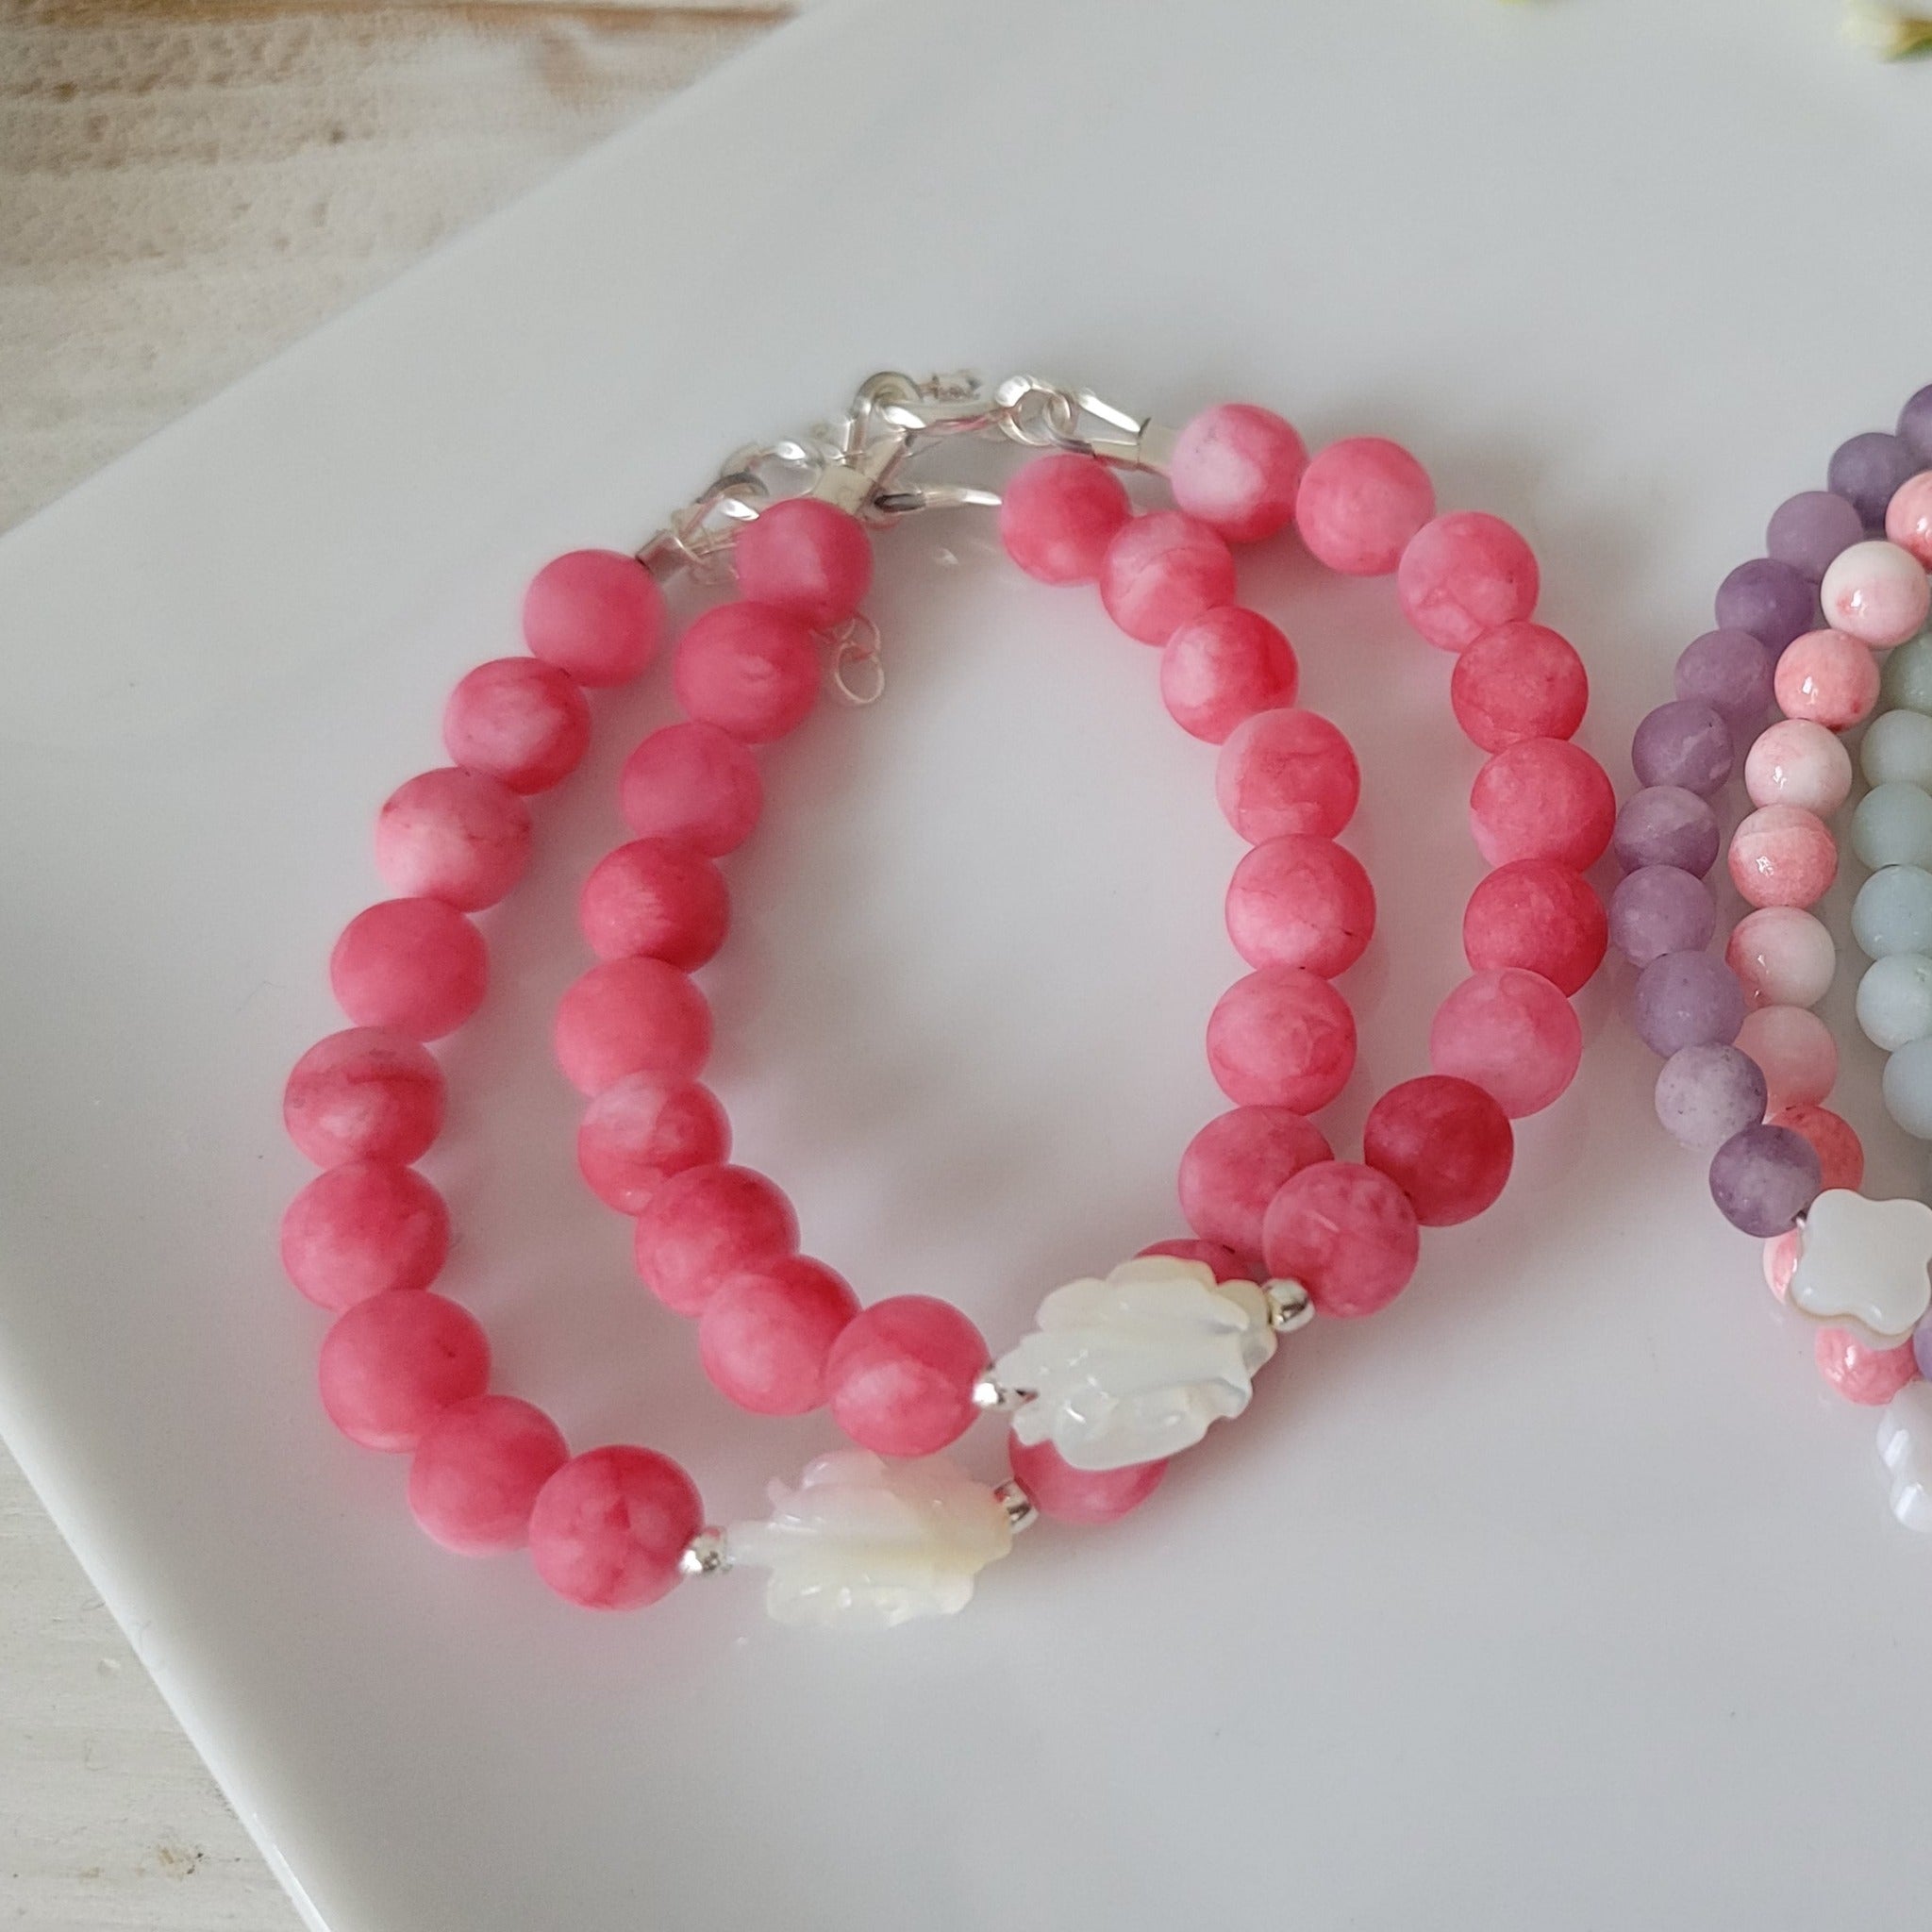 Rose Flower Natural Stone Bead Bracelet - 1 Bracelet - Multiple Color Choices